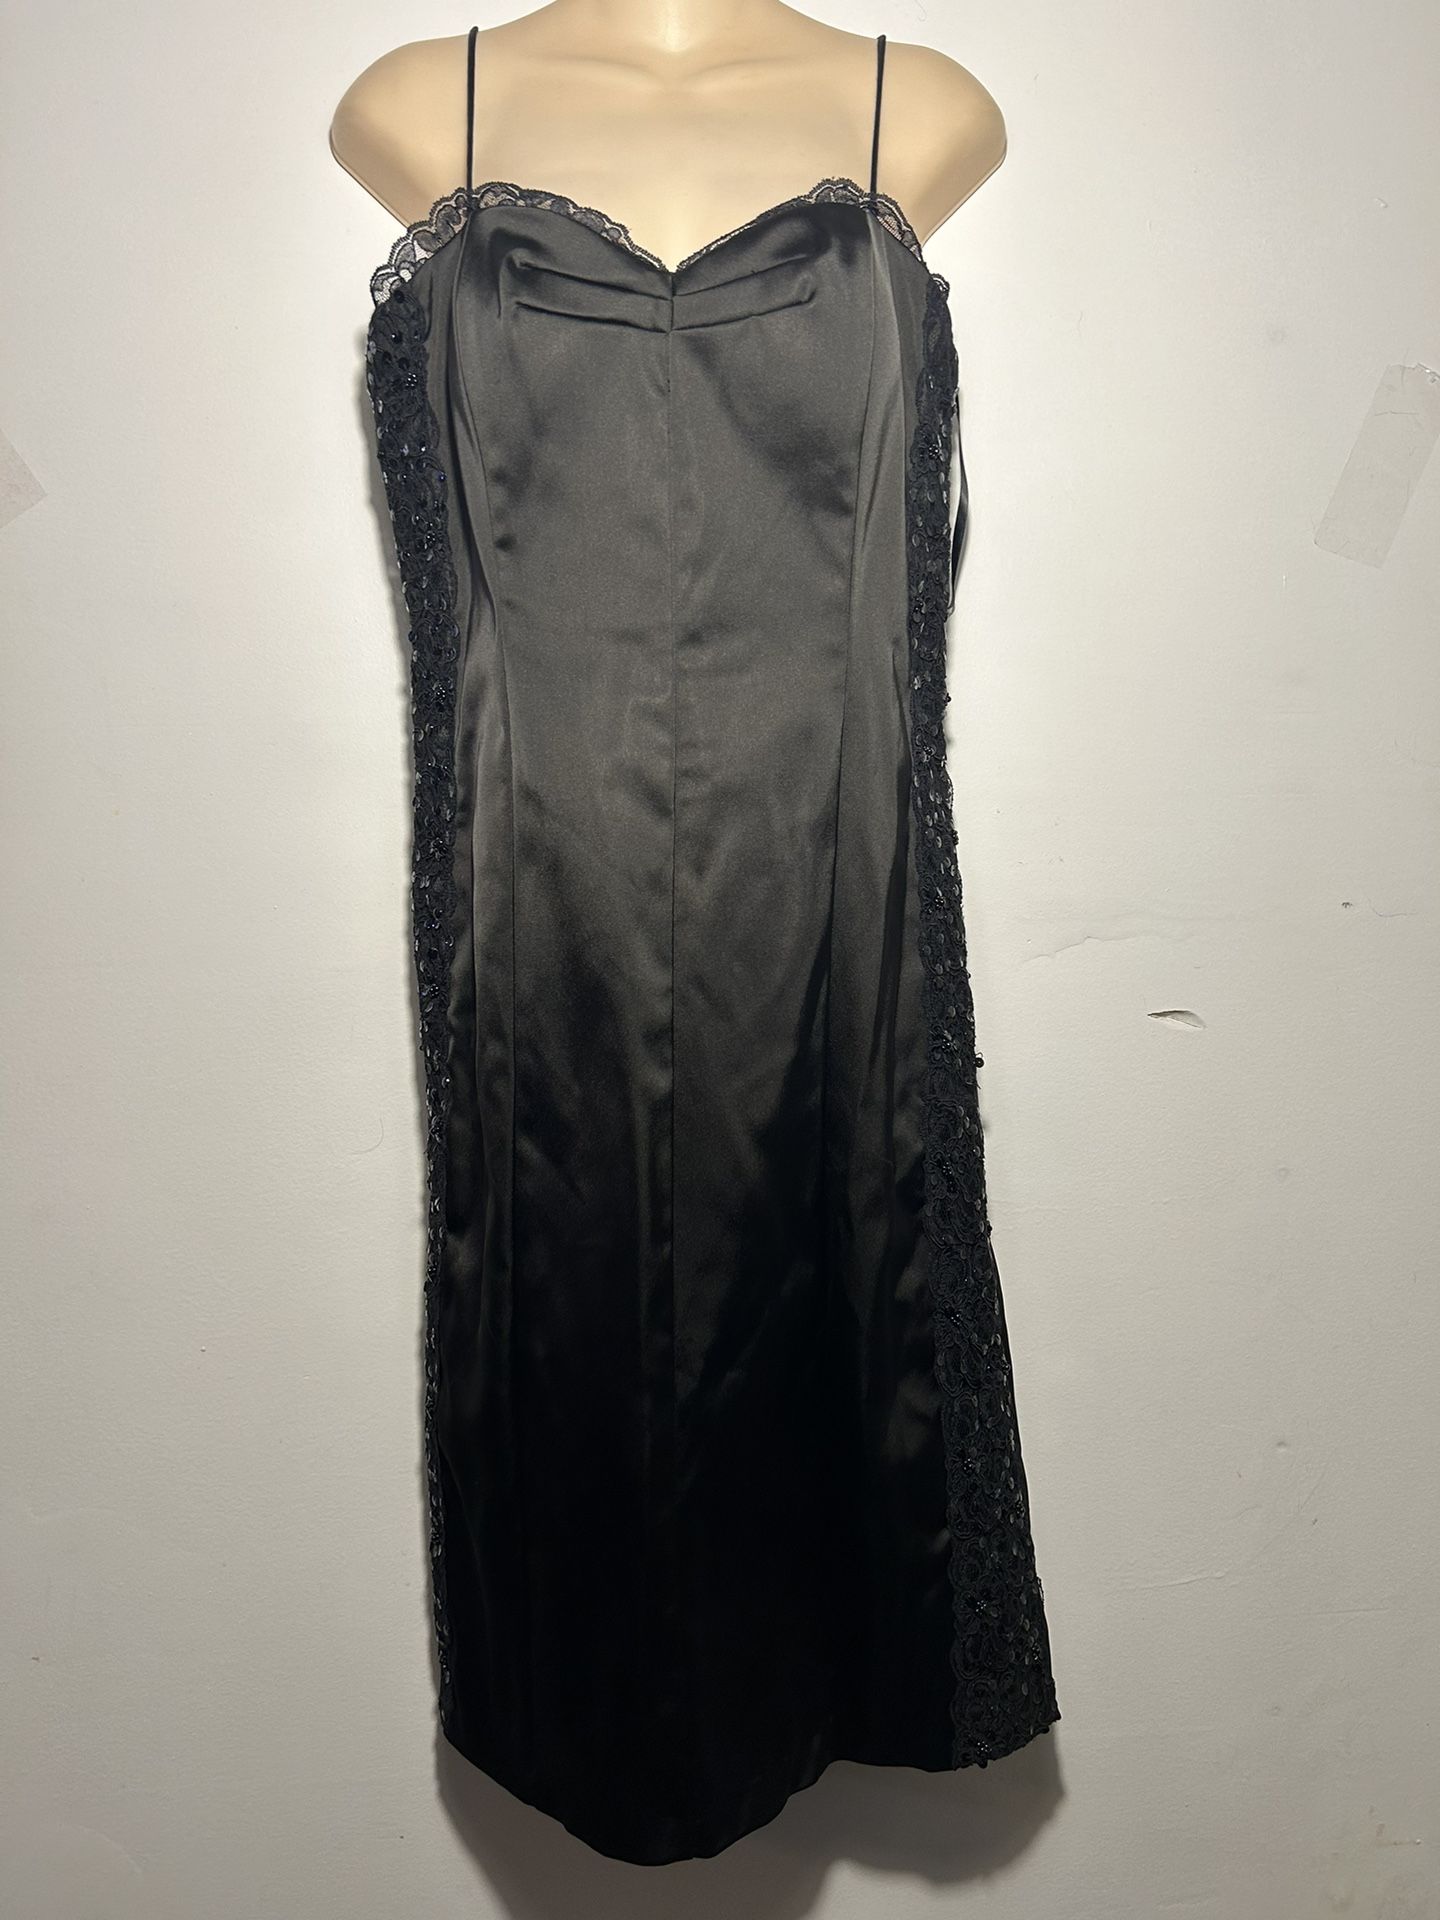 Elegant women's satin dress. Size 14. $60.